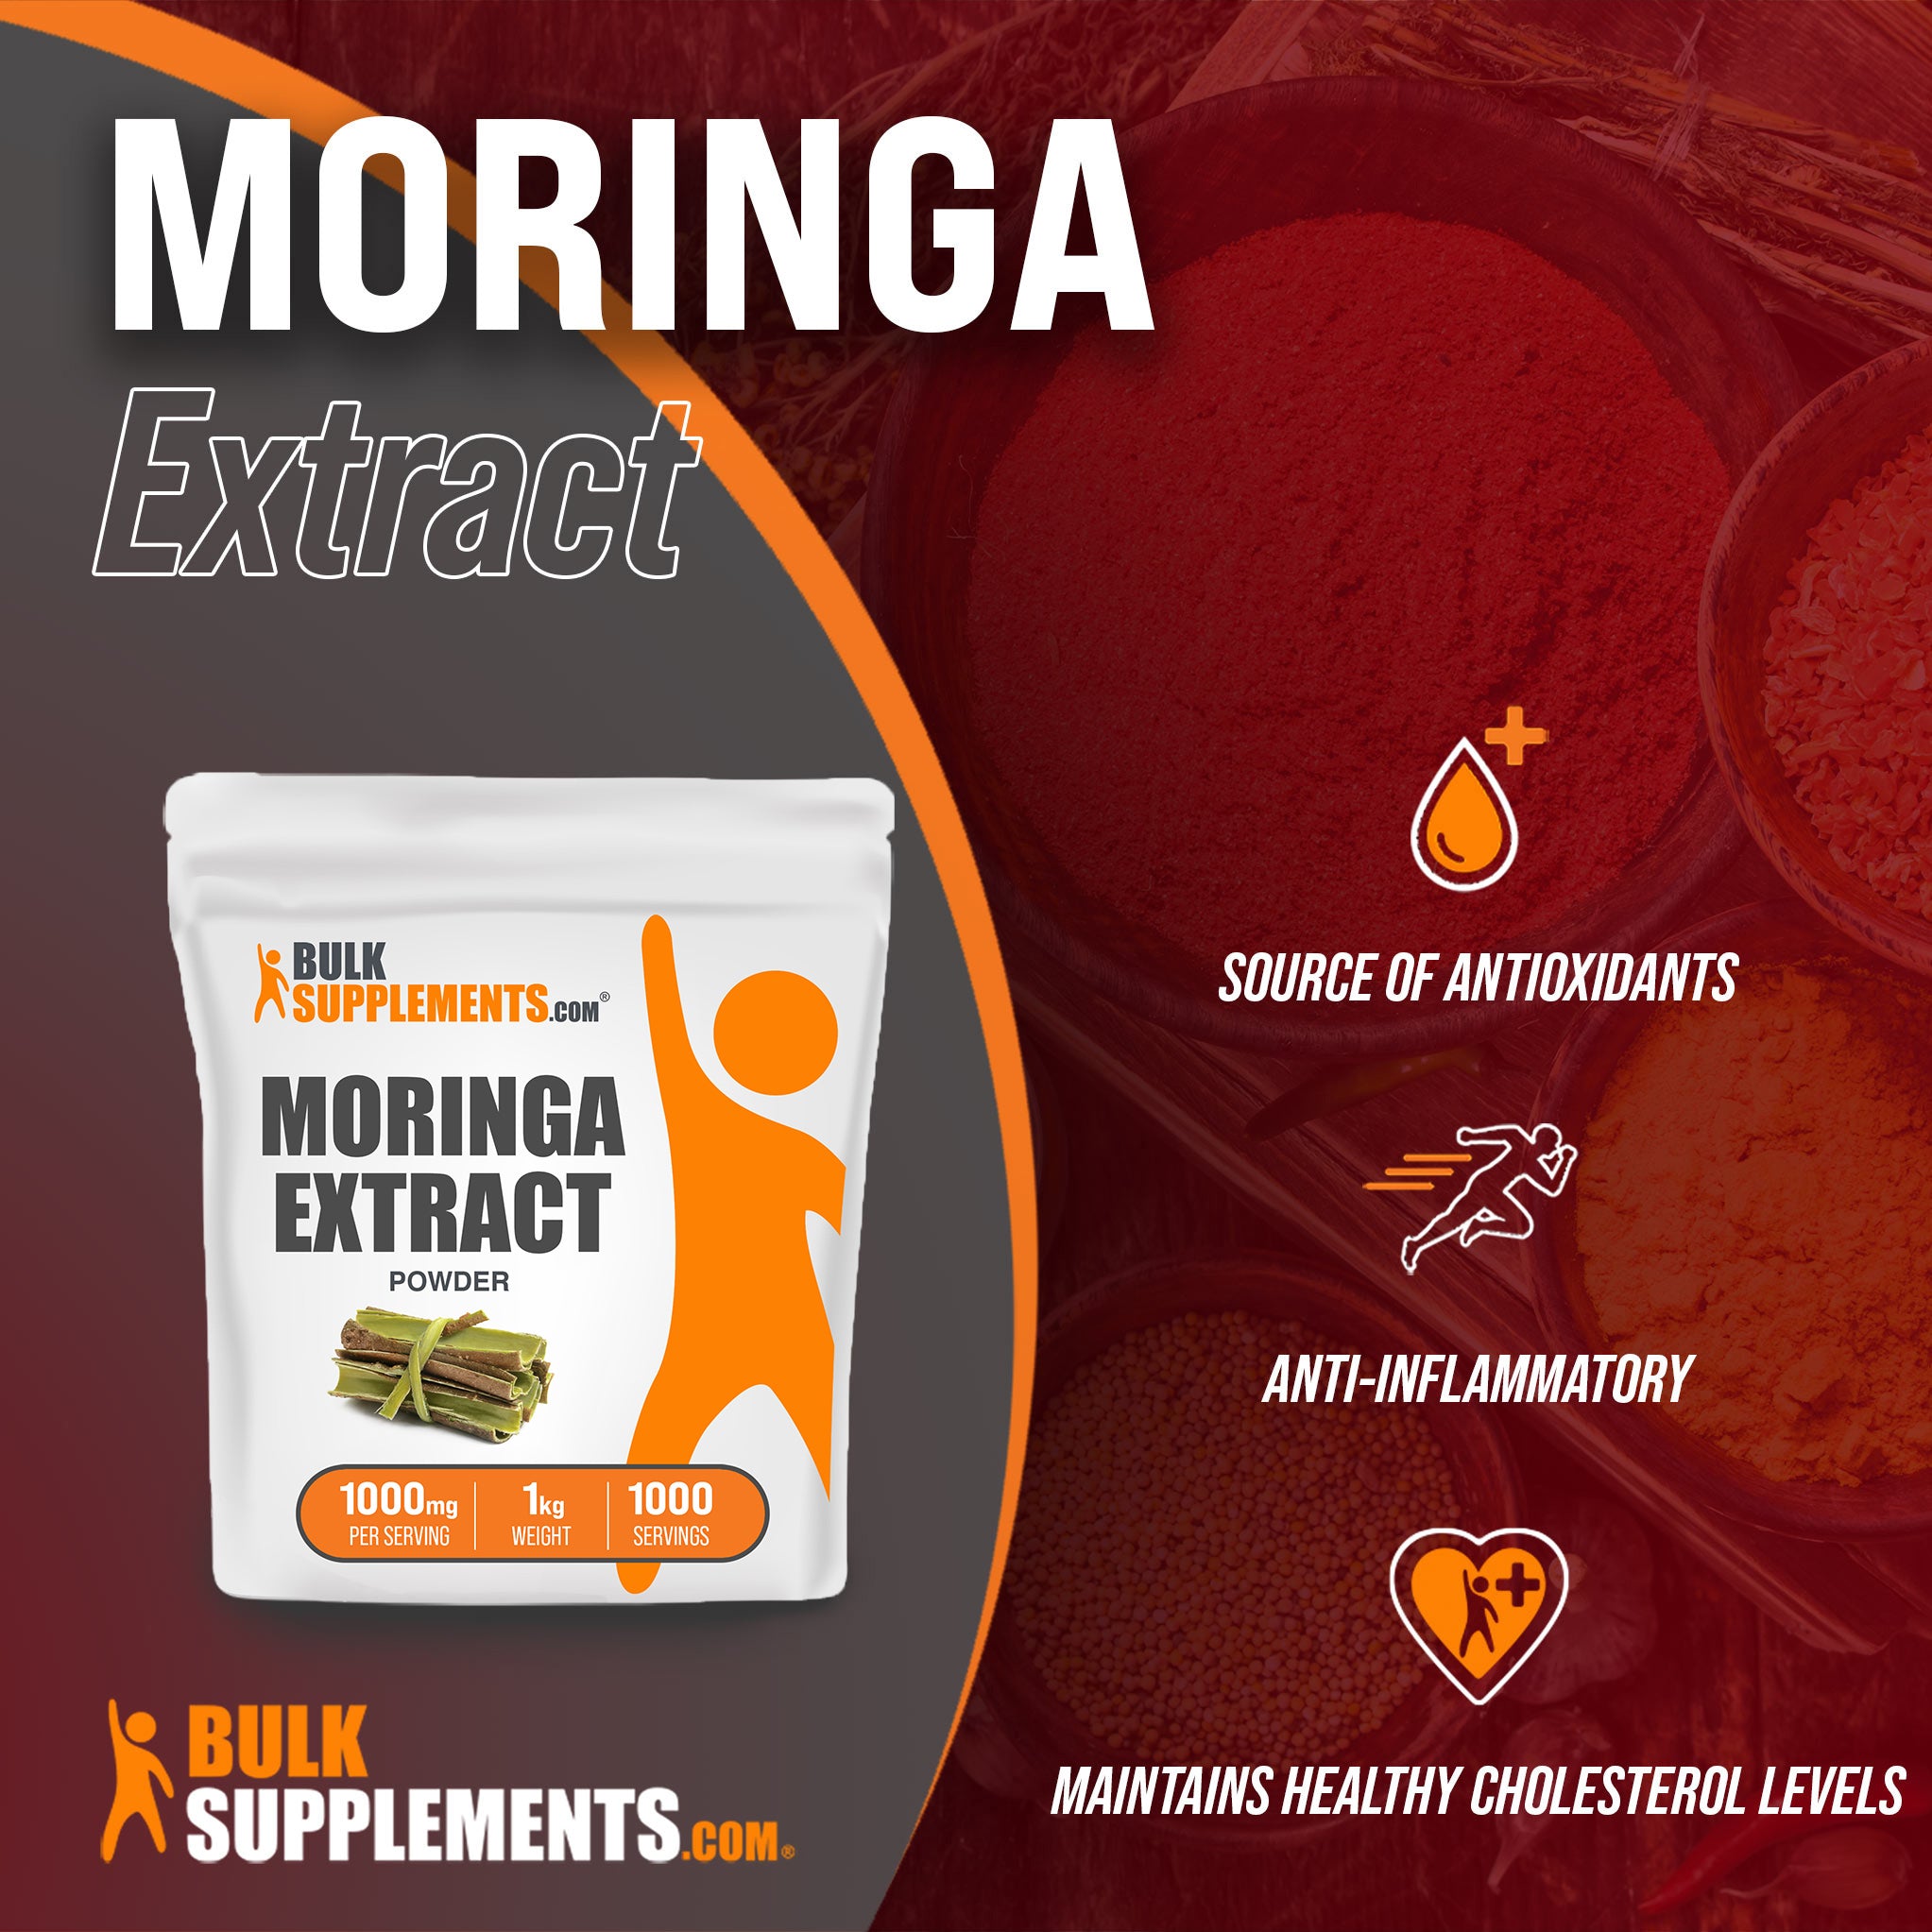 Benefits of Moringa Extract: source of antioxidants, anti-inflammatory, maintains healthy cholesterol levels